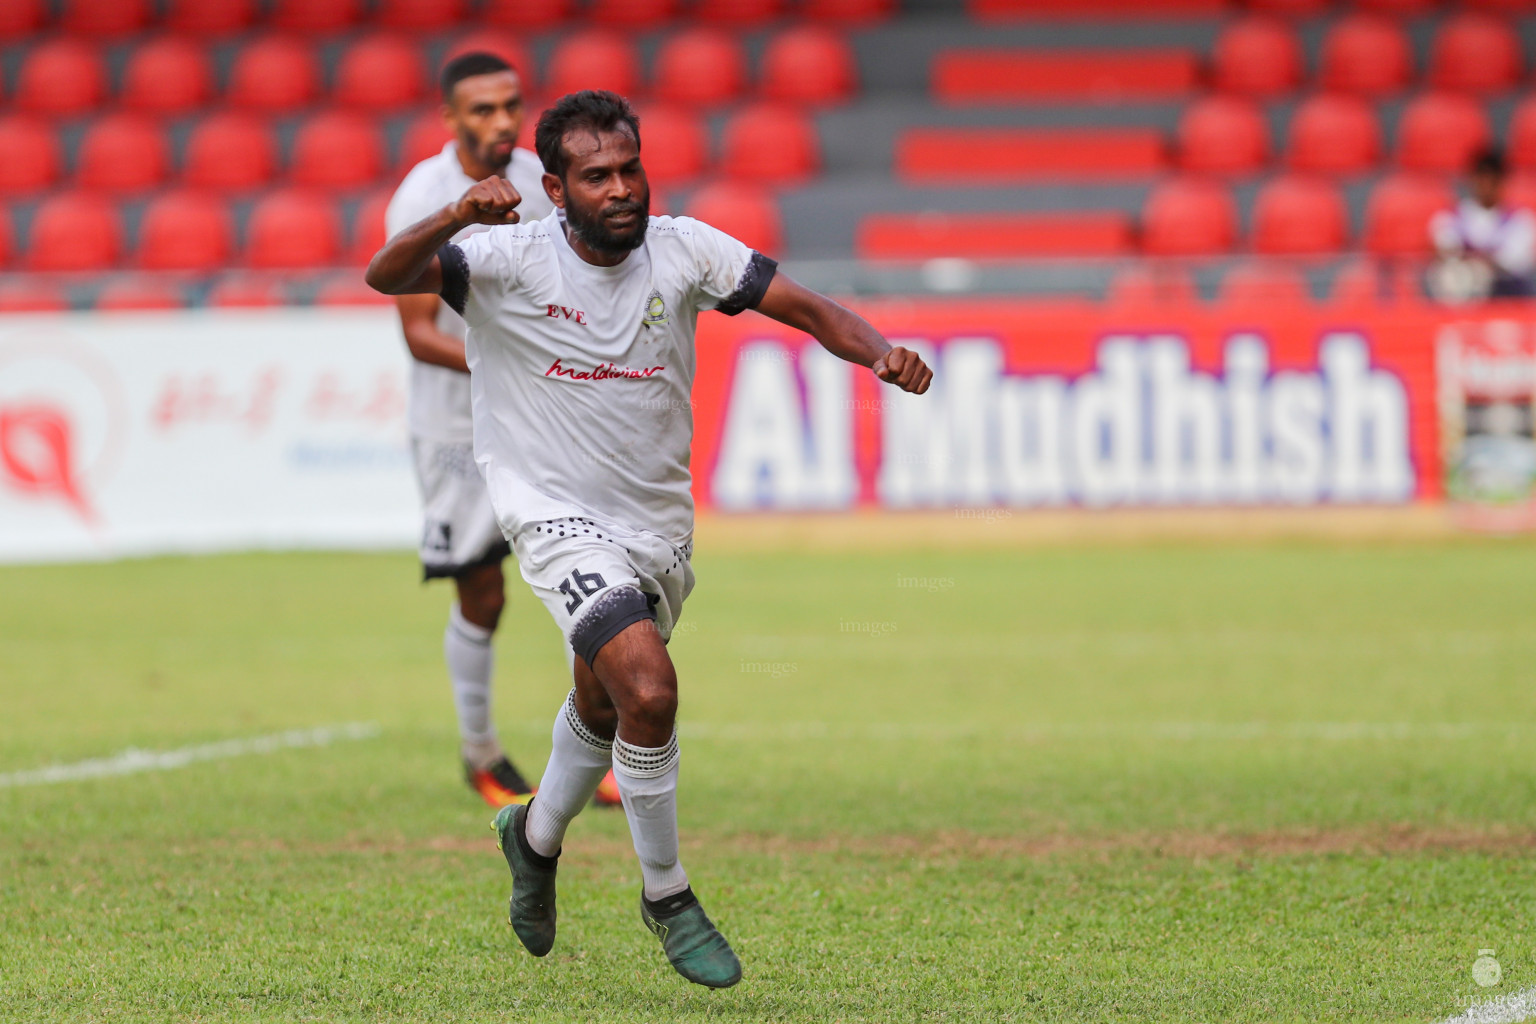 Dhiraagu Dhivehi Premier League 2018: Victory SC vs Green Streets